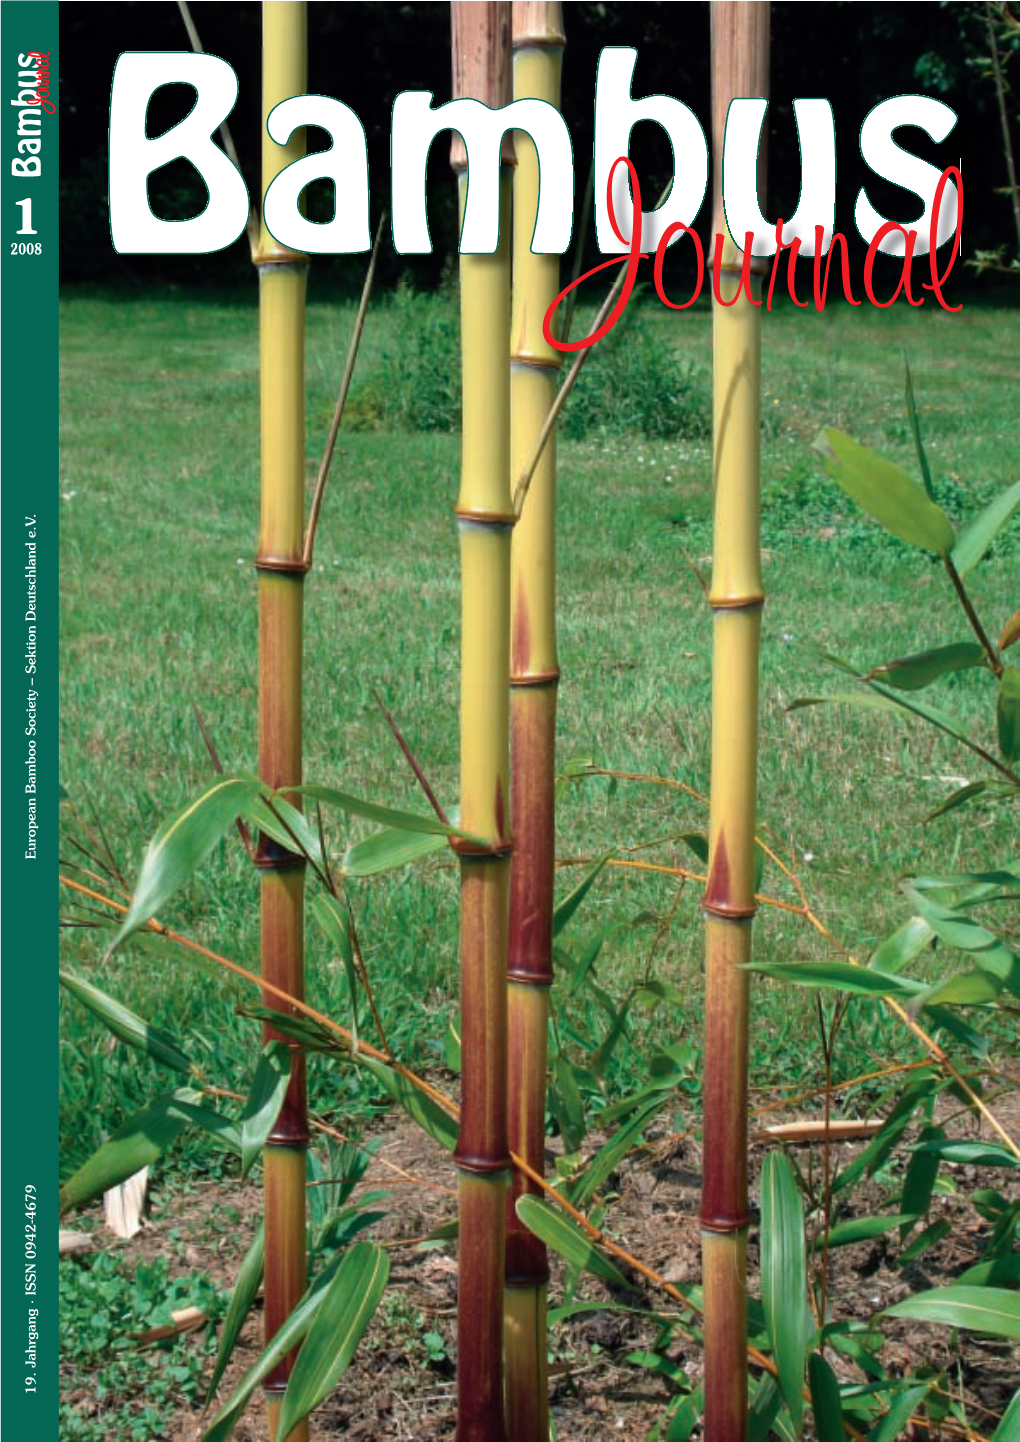 Bambus-Deutschland.De Den Laub, Winterhart